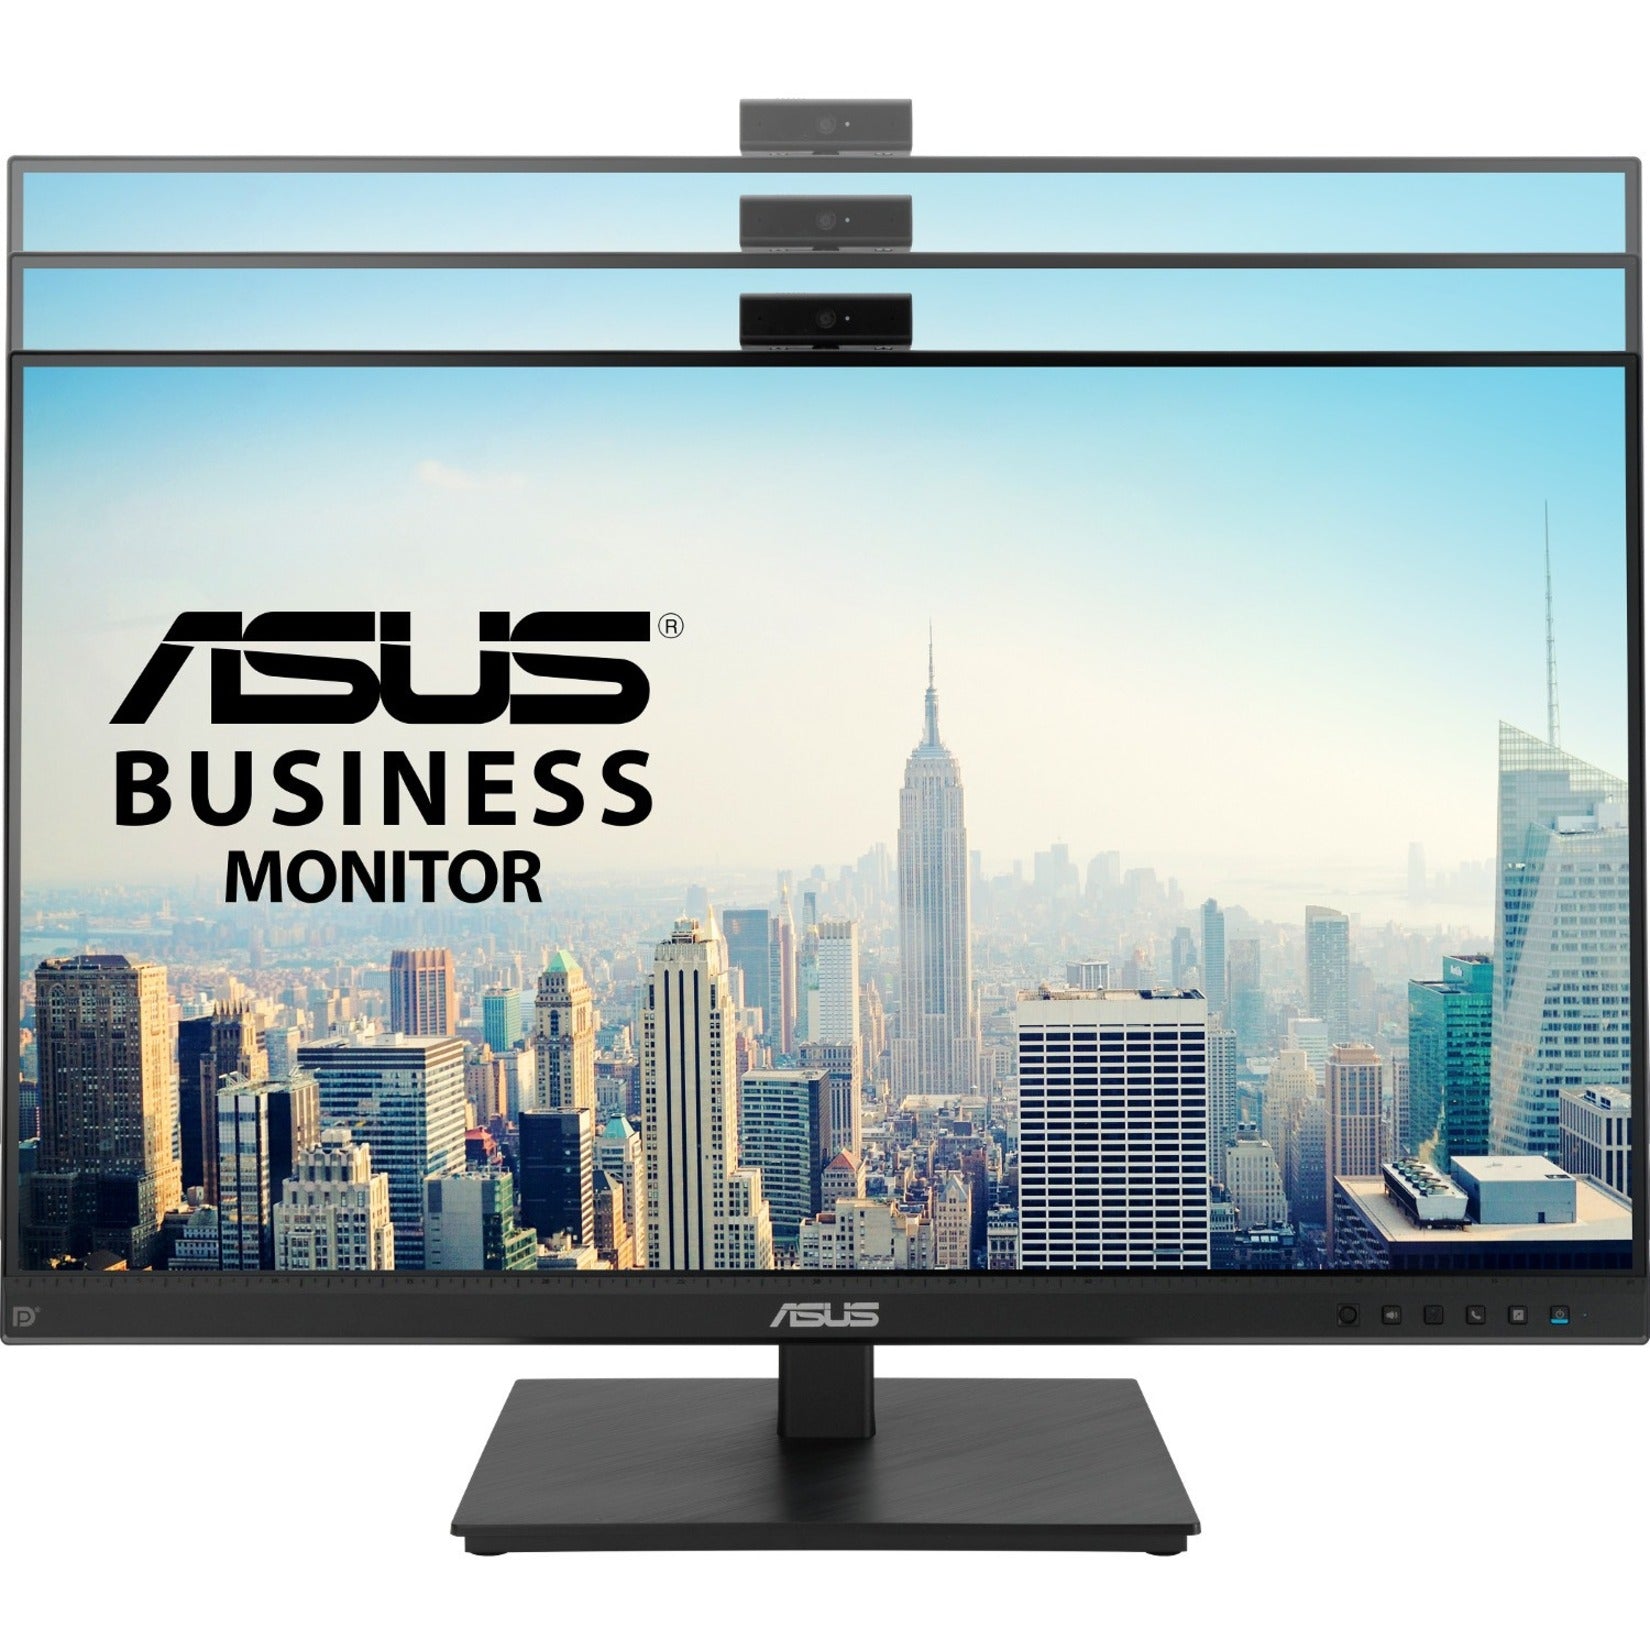 Asus BE279QSK 27" Webcam Full HD LCD Monitor - 16:9, Built-in Speakers, 250 Nit Brightness, 1920 x 1080 Resolution